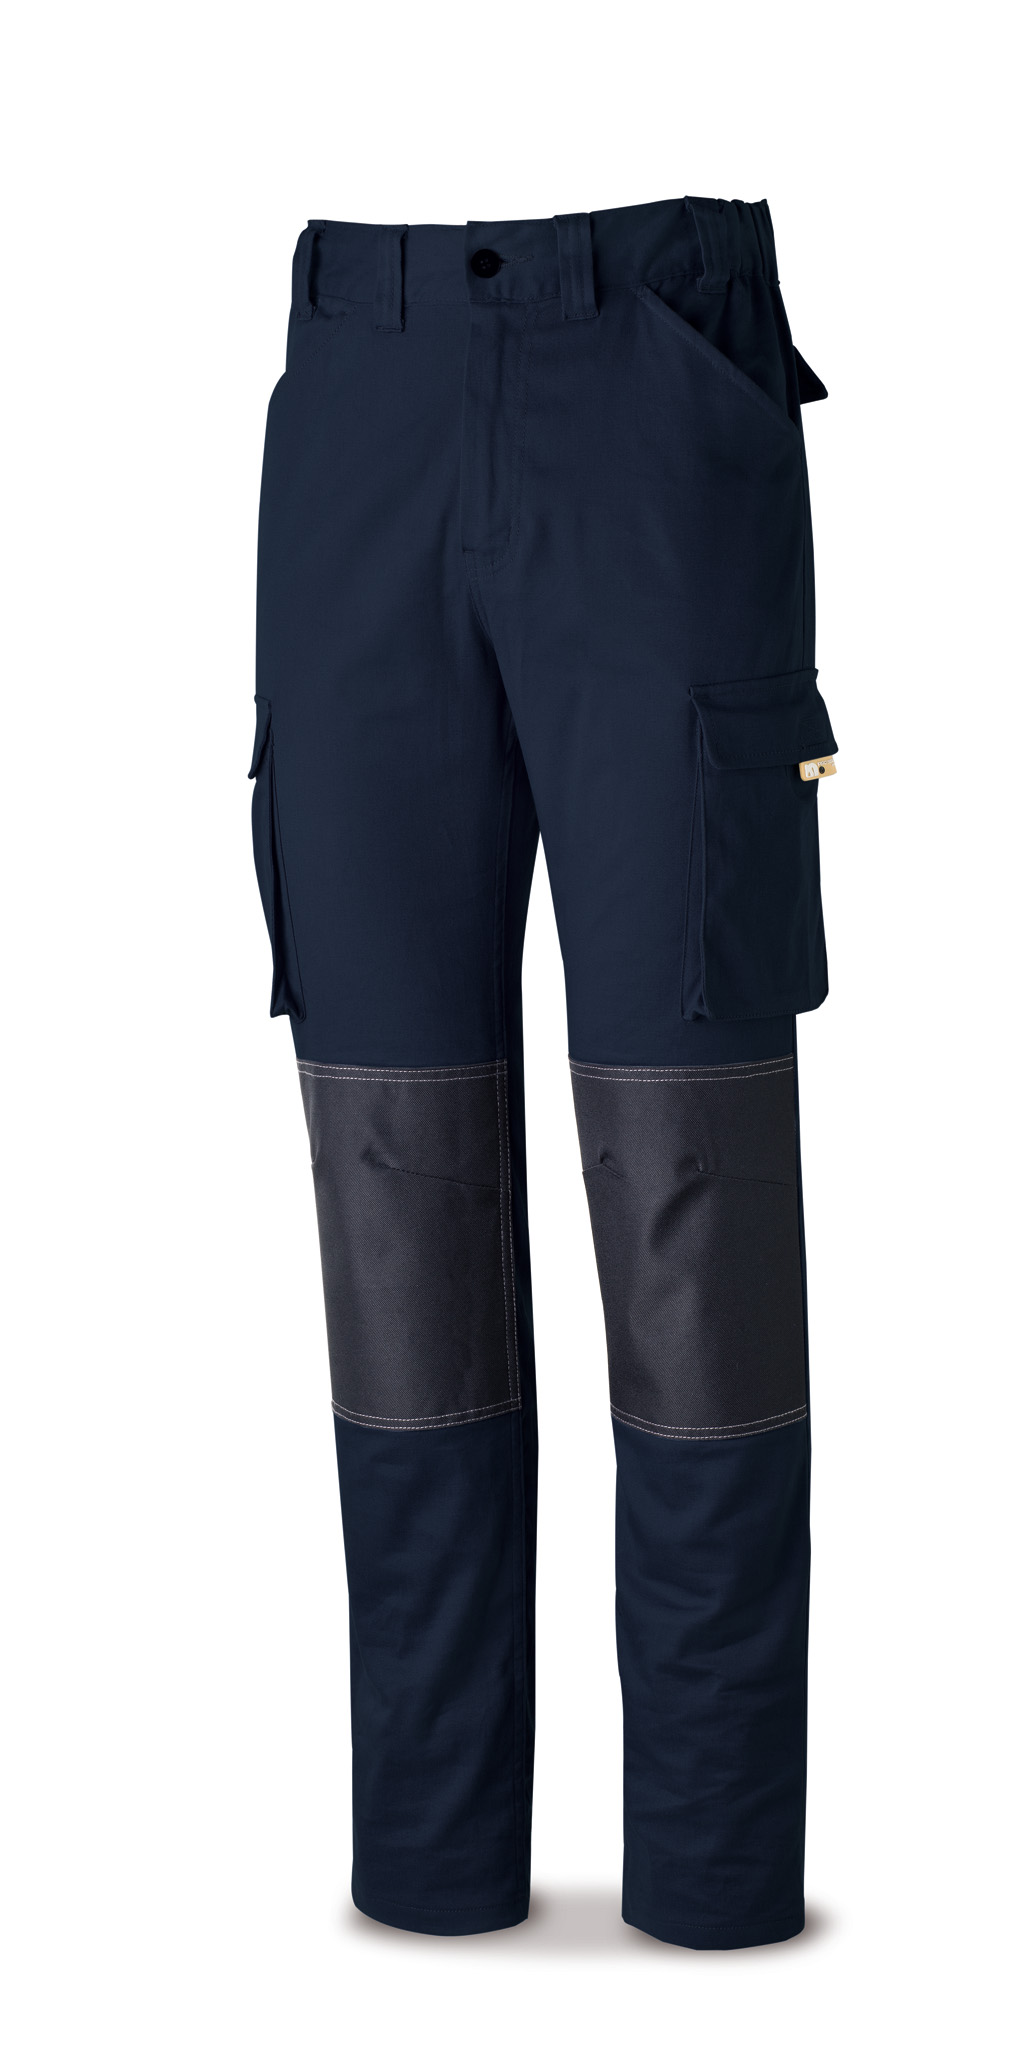 588-PSTRA Vestuario Laboral Pro Series Pantalón STRETCH Pro Series azul marino algodón. 220 gr. Multibolsillos